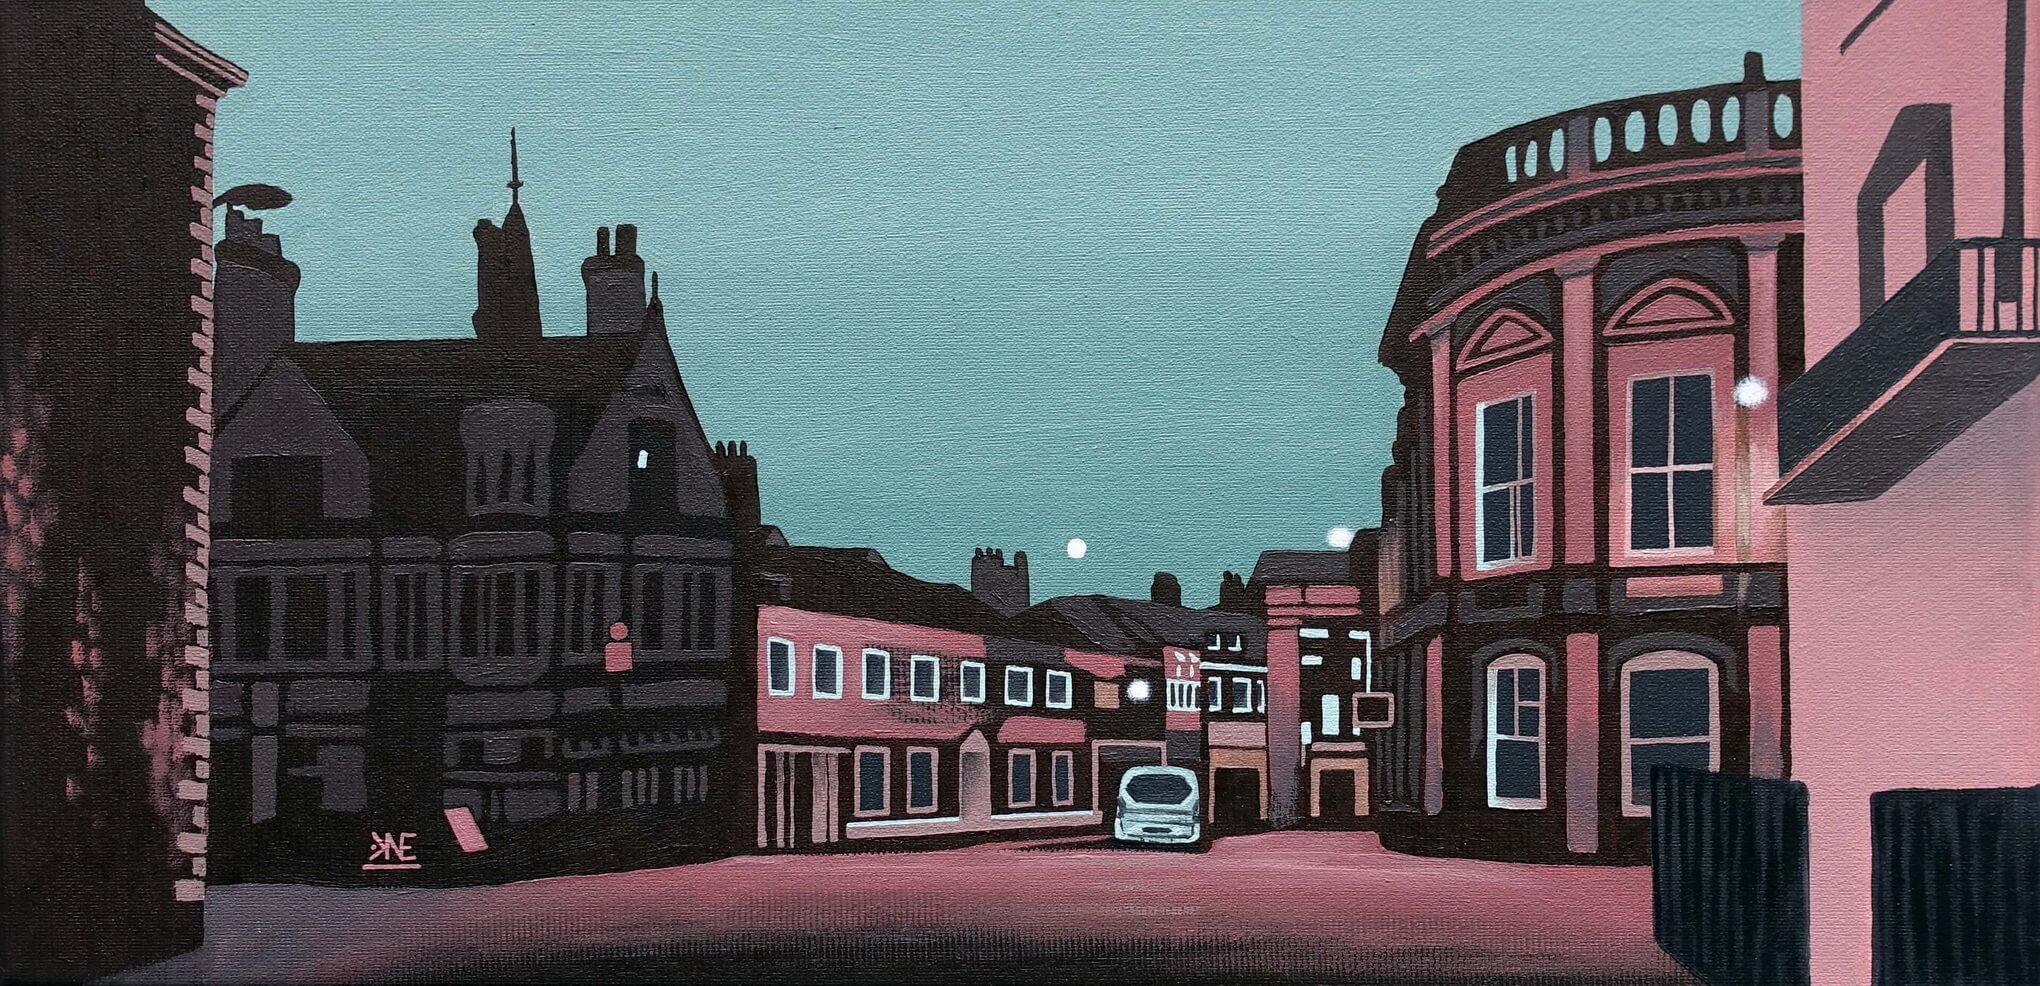 Nightfall @ Blake Street, York painting